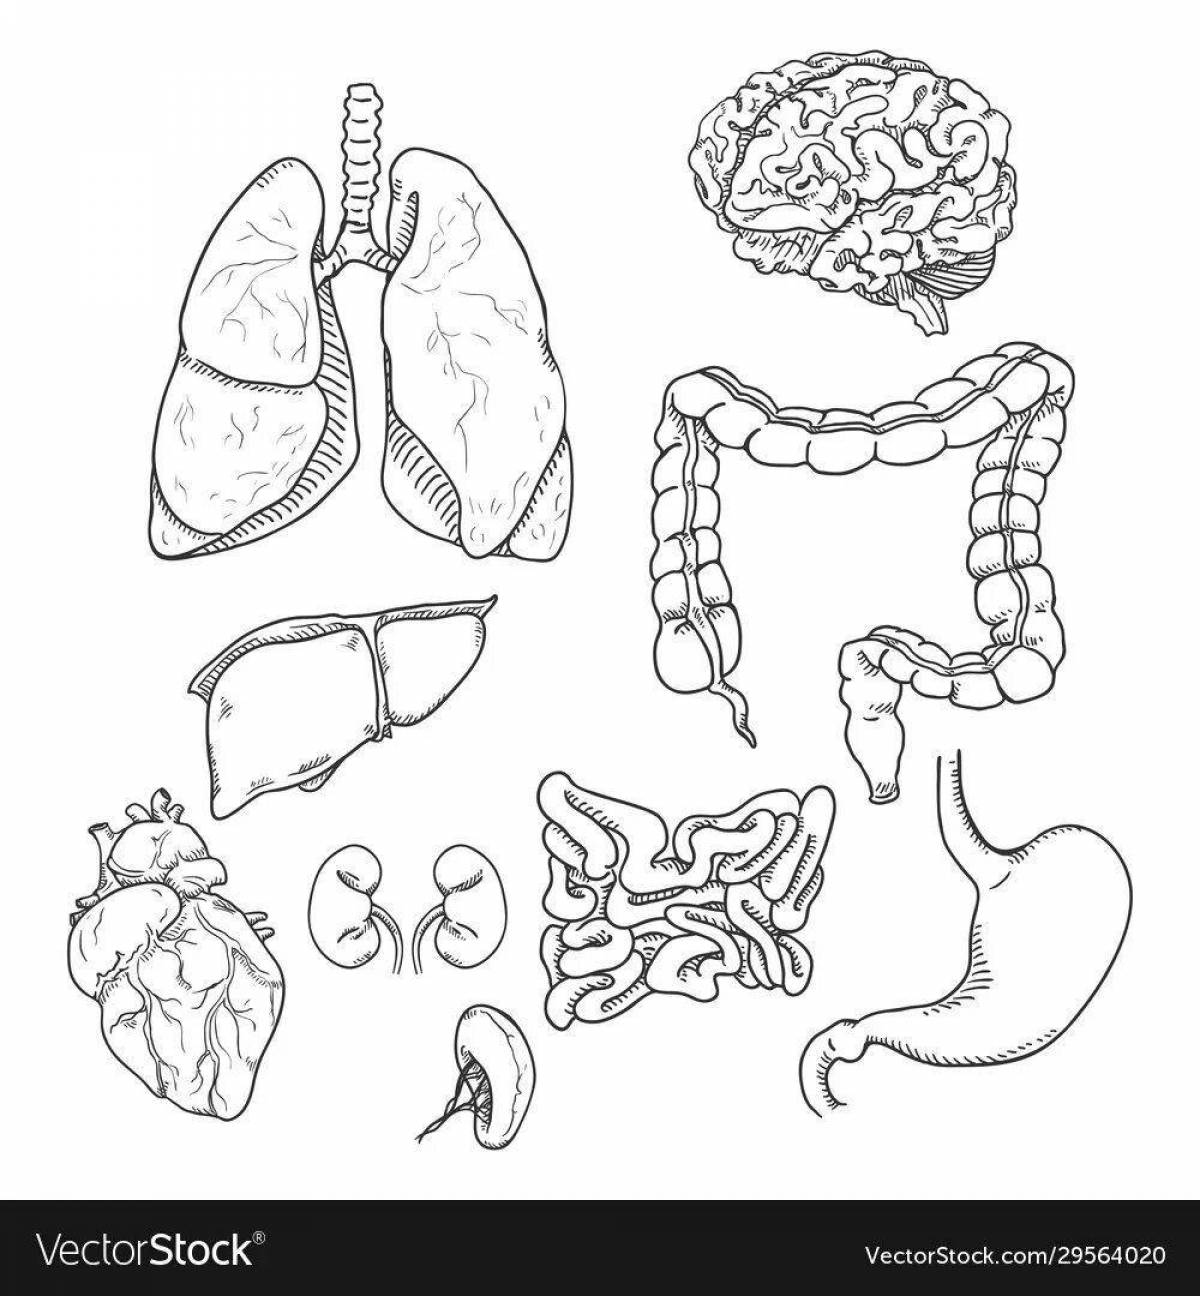 Human anatomy fun coloring book for kids